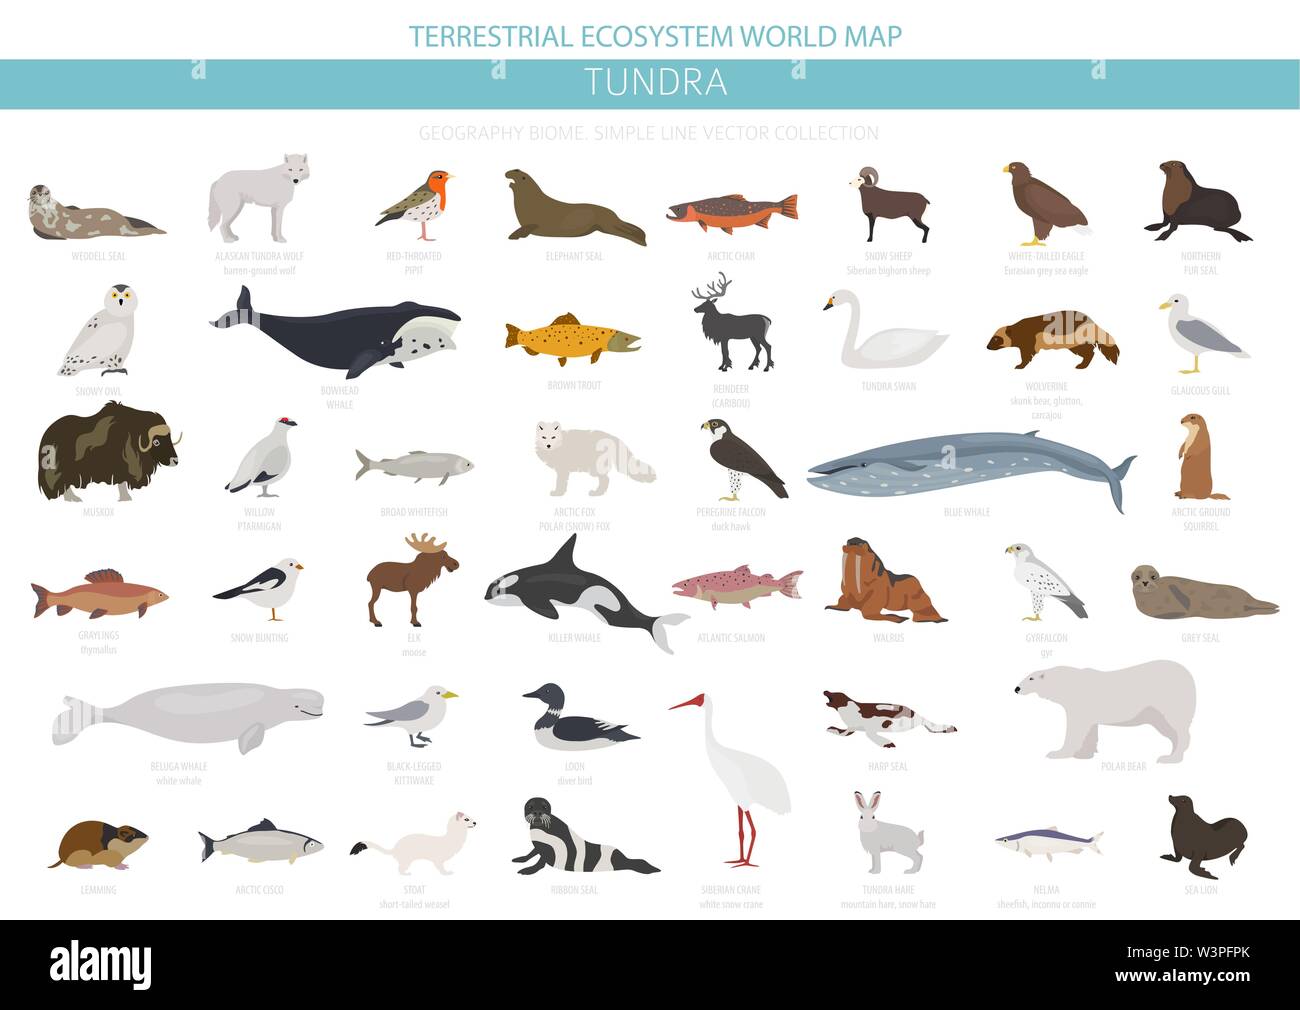 Tundra biome. Terrestrial ecosystem world map. Arctic animals, birds, fish  and plants infographic design. Vector illustration Stock Vector Image & Art  - Alamy